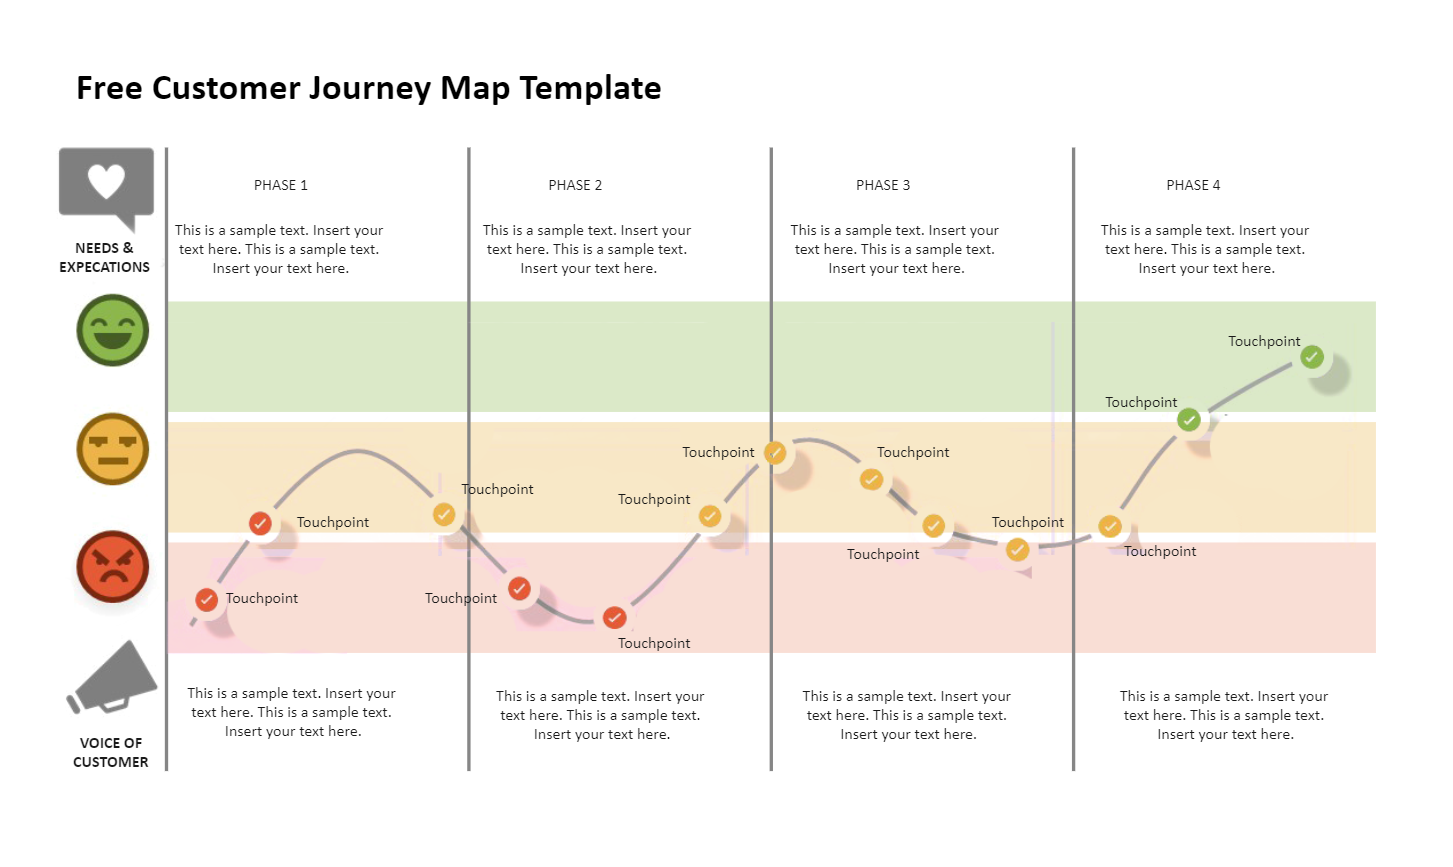 Free Customer Journey Map